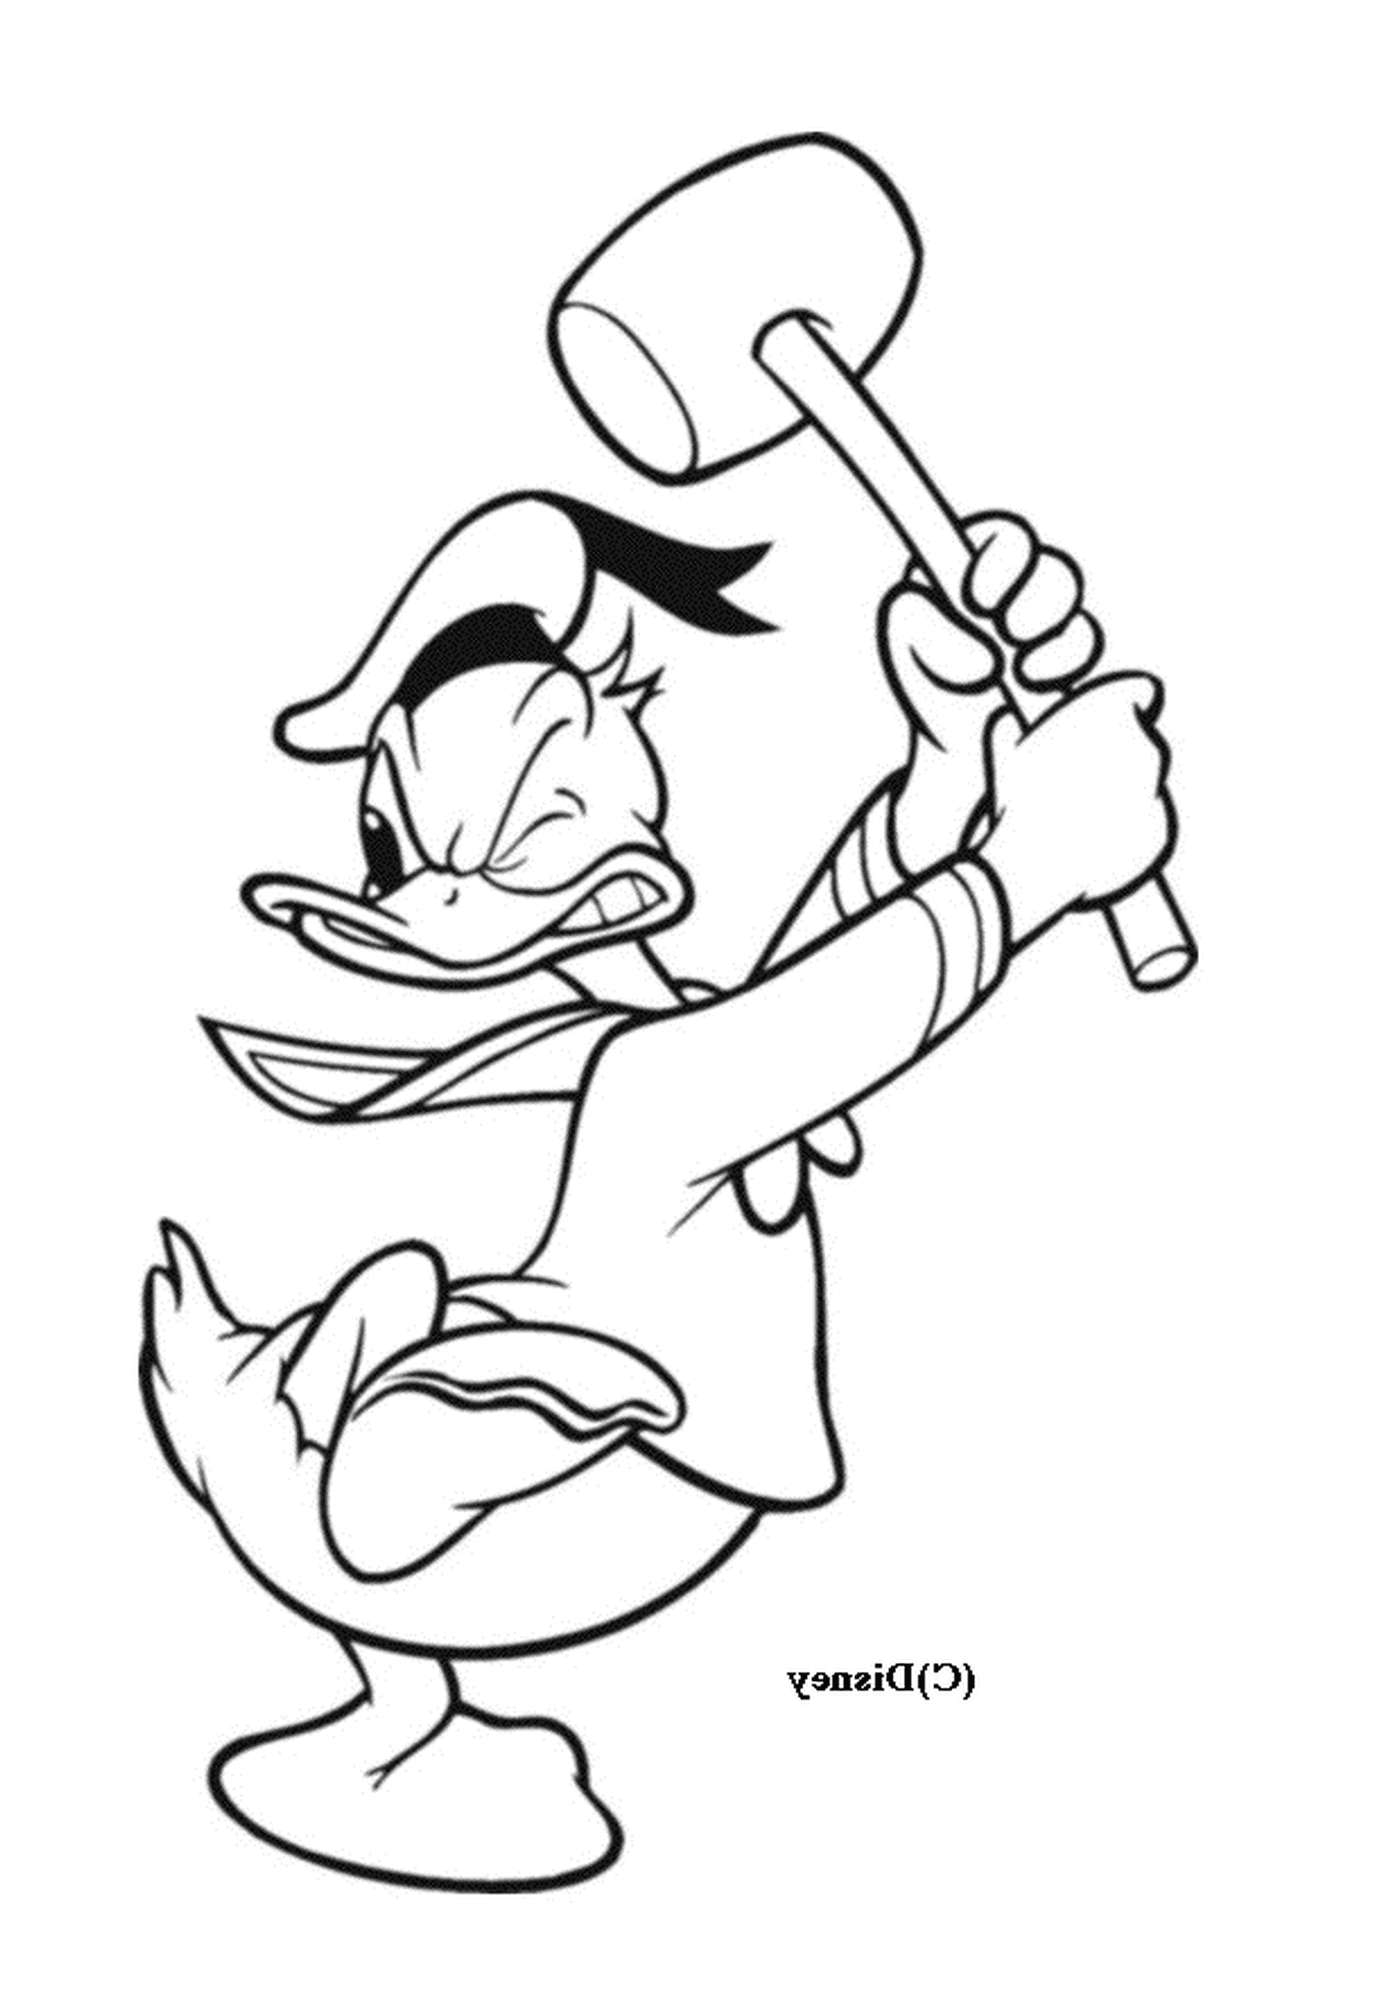  Donald juega al béisbol con vigor 